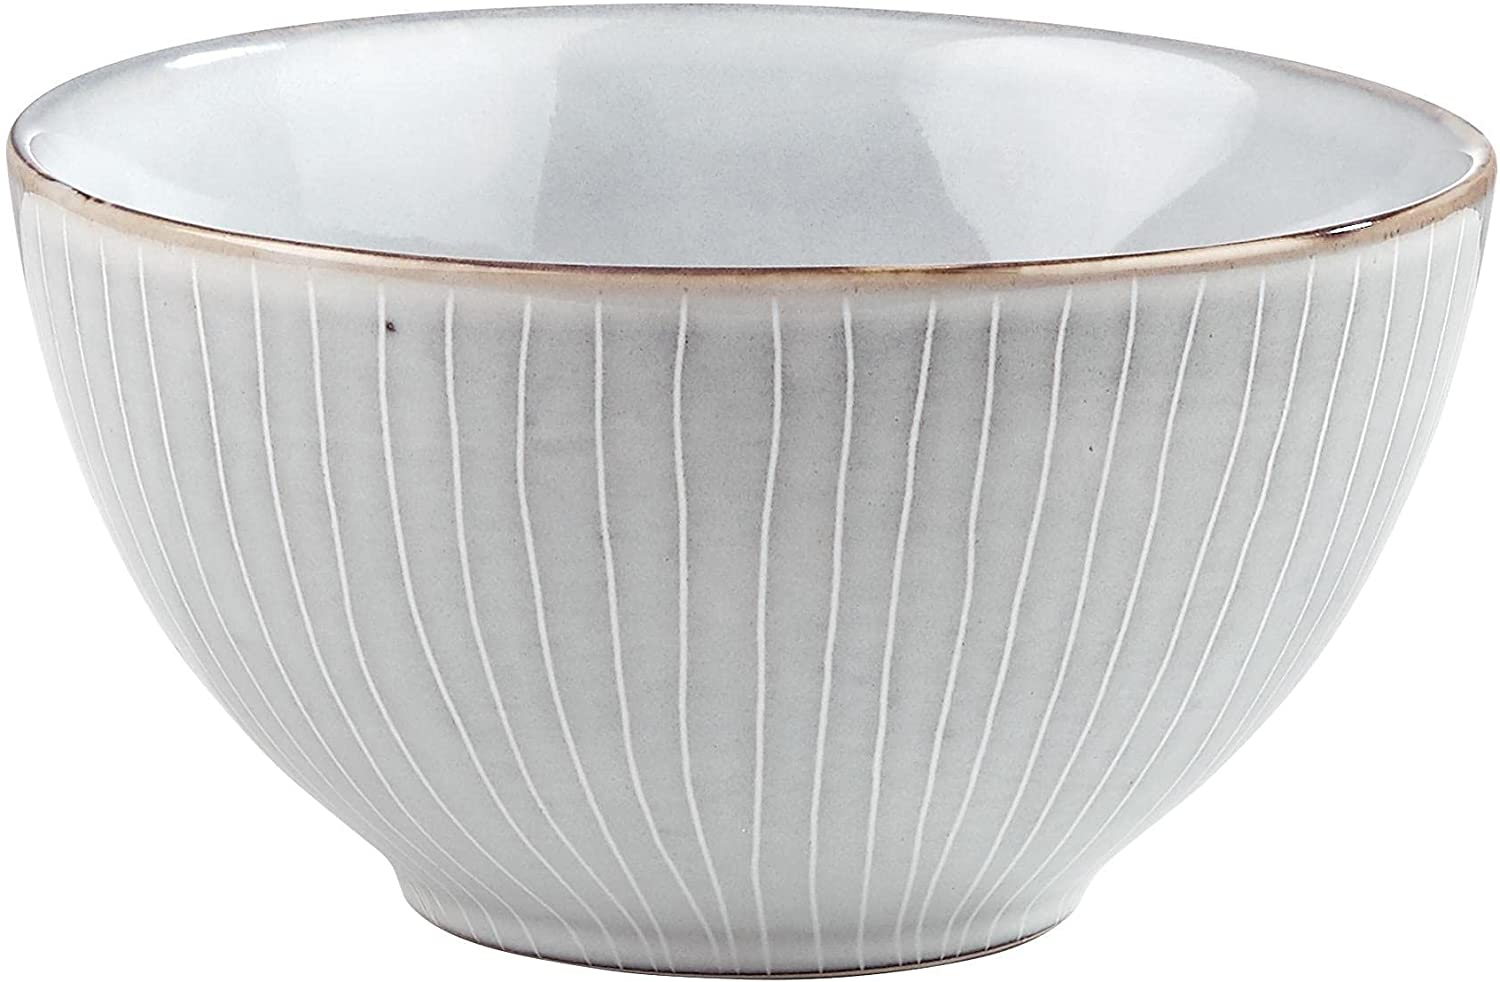 BUTLERS Henley Bowl in Grey Diameter 17 cm - Bowl Made of Stoneware Salad Bowl, Cereal Bowl, Soup Bowl, Fruit Bowl